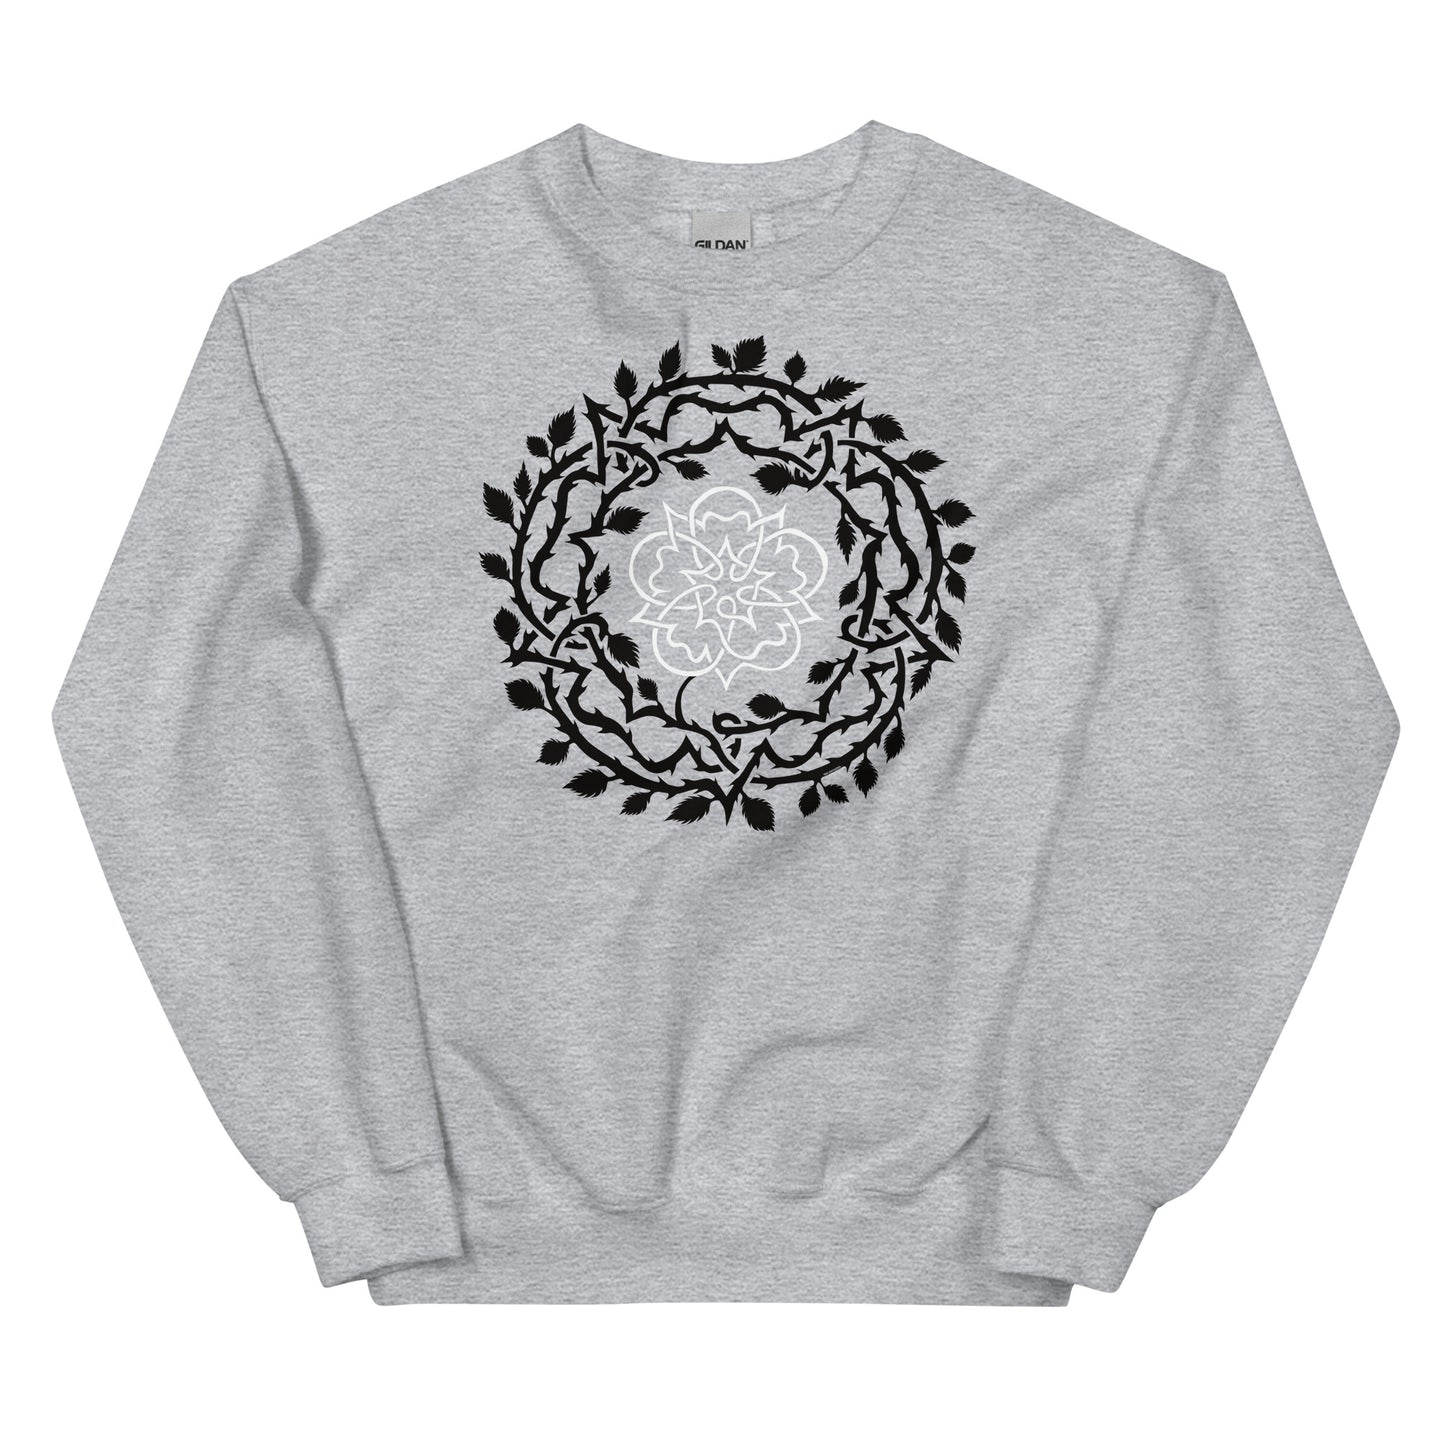 Sweater - White Rose